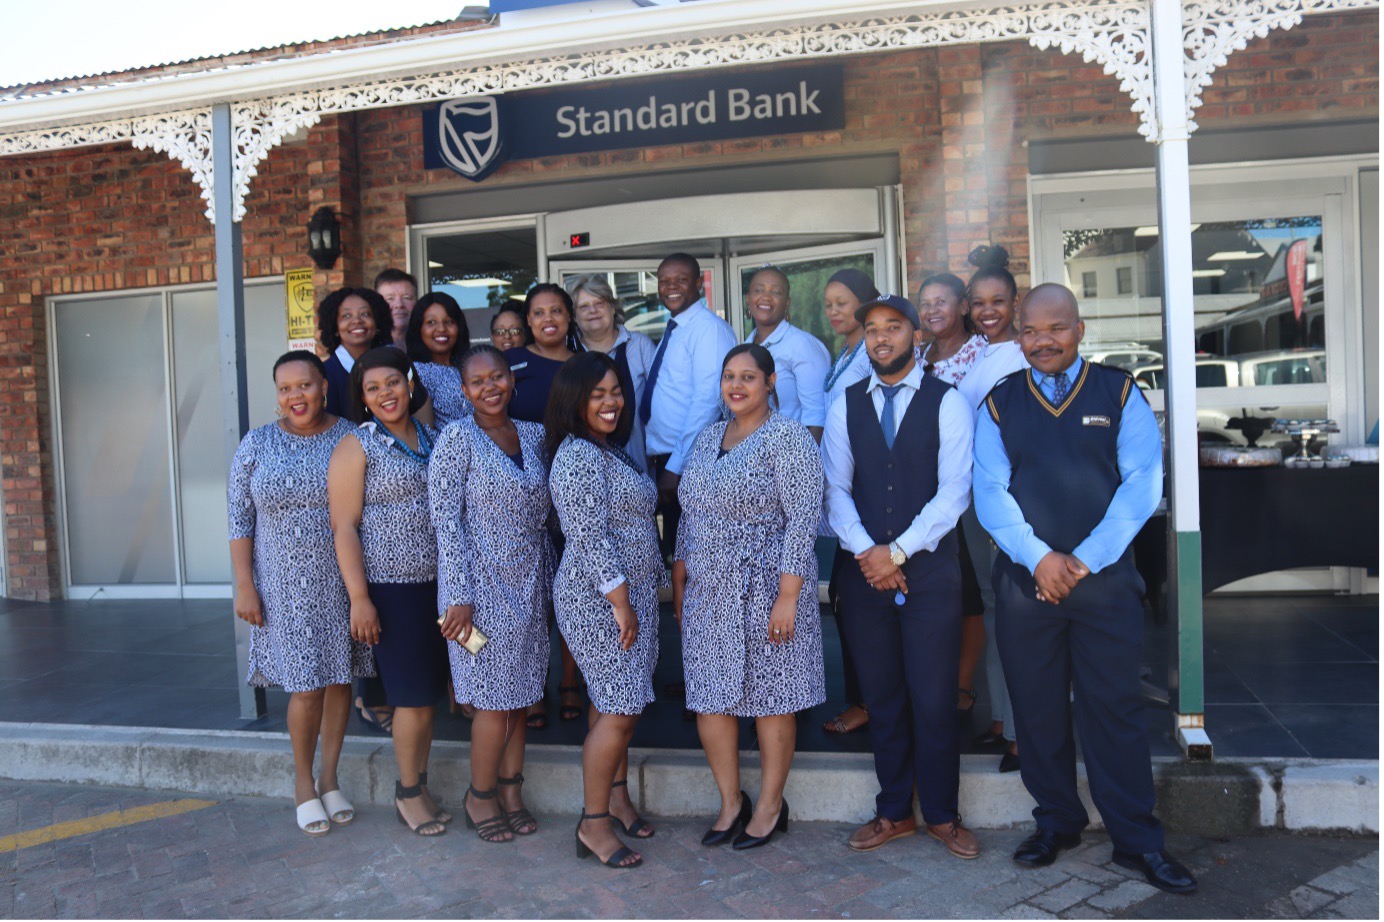 Standard Bank staff members that make banking easier. Photo: Linda Mkaza 